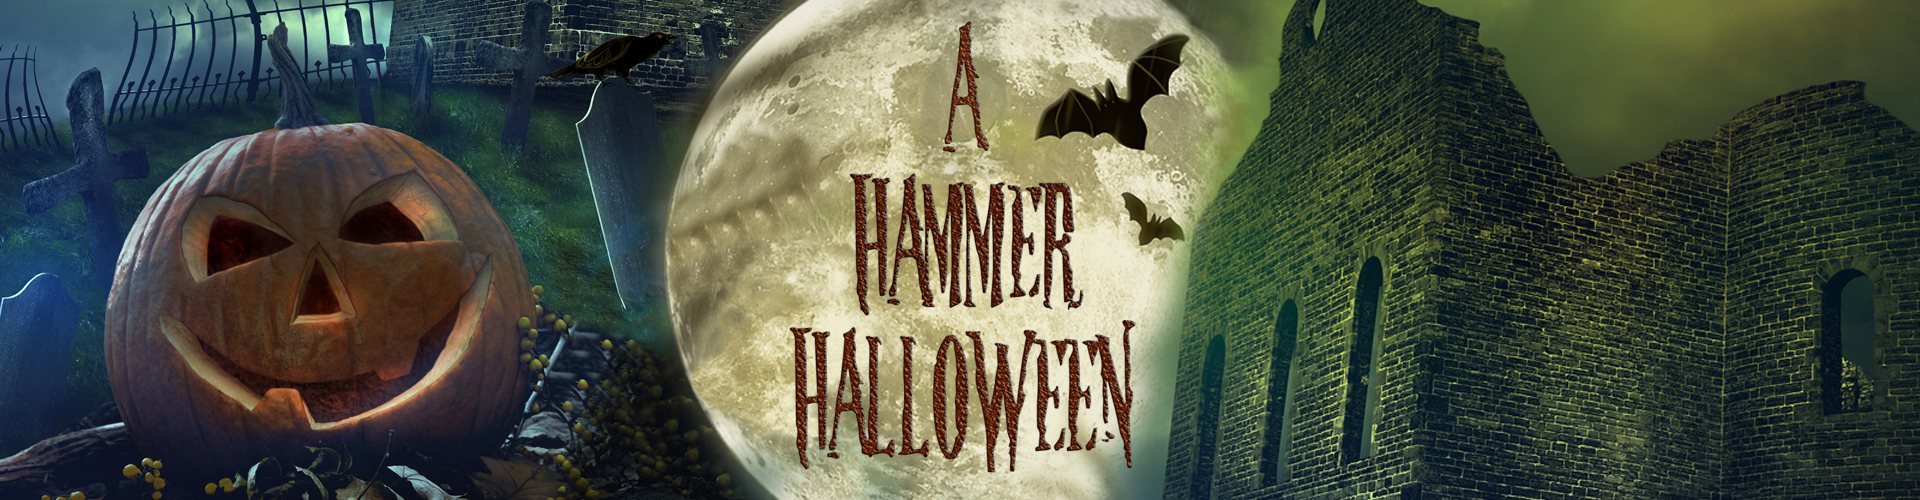 Hammer Halloween banner image